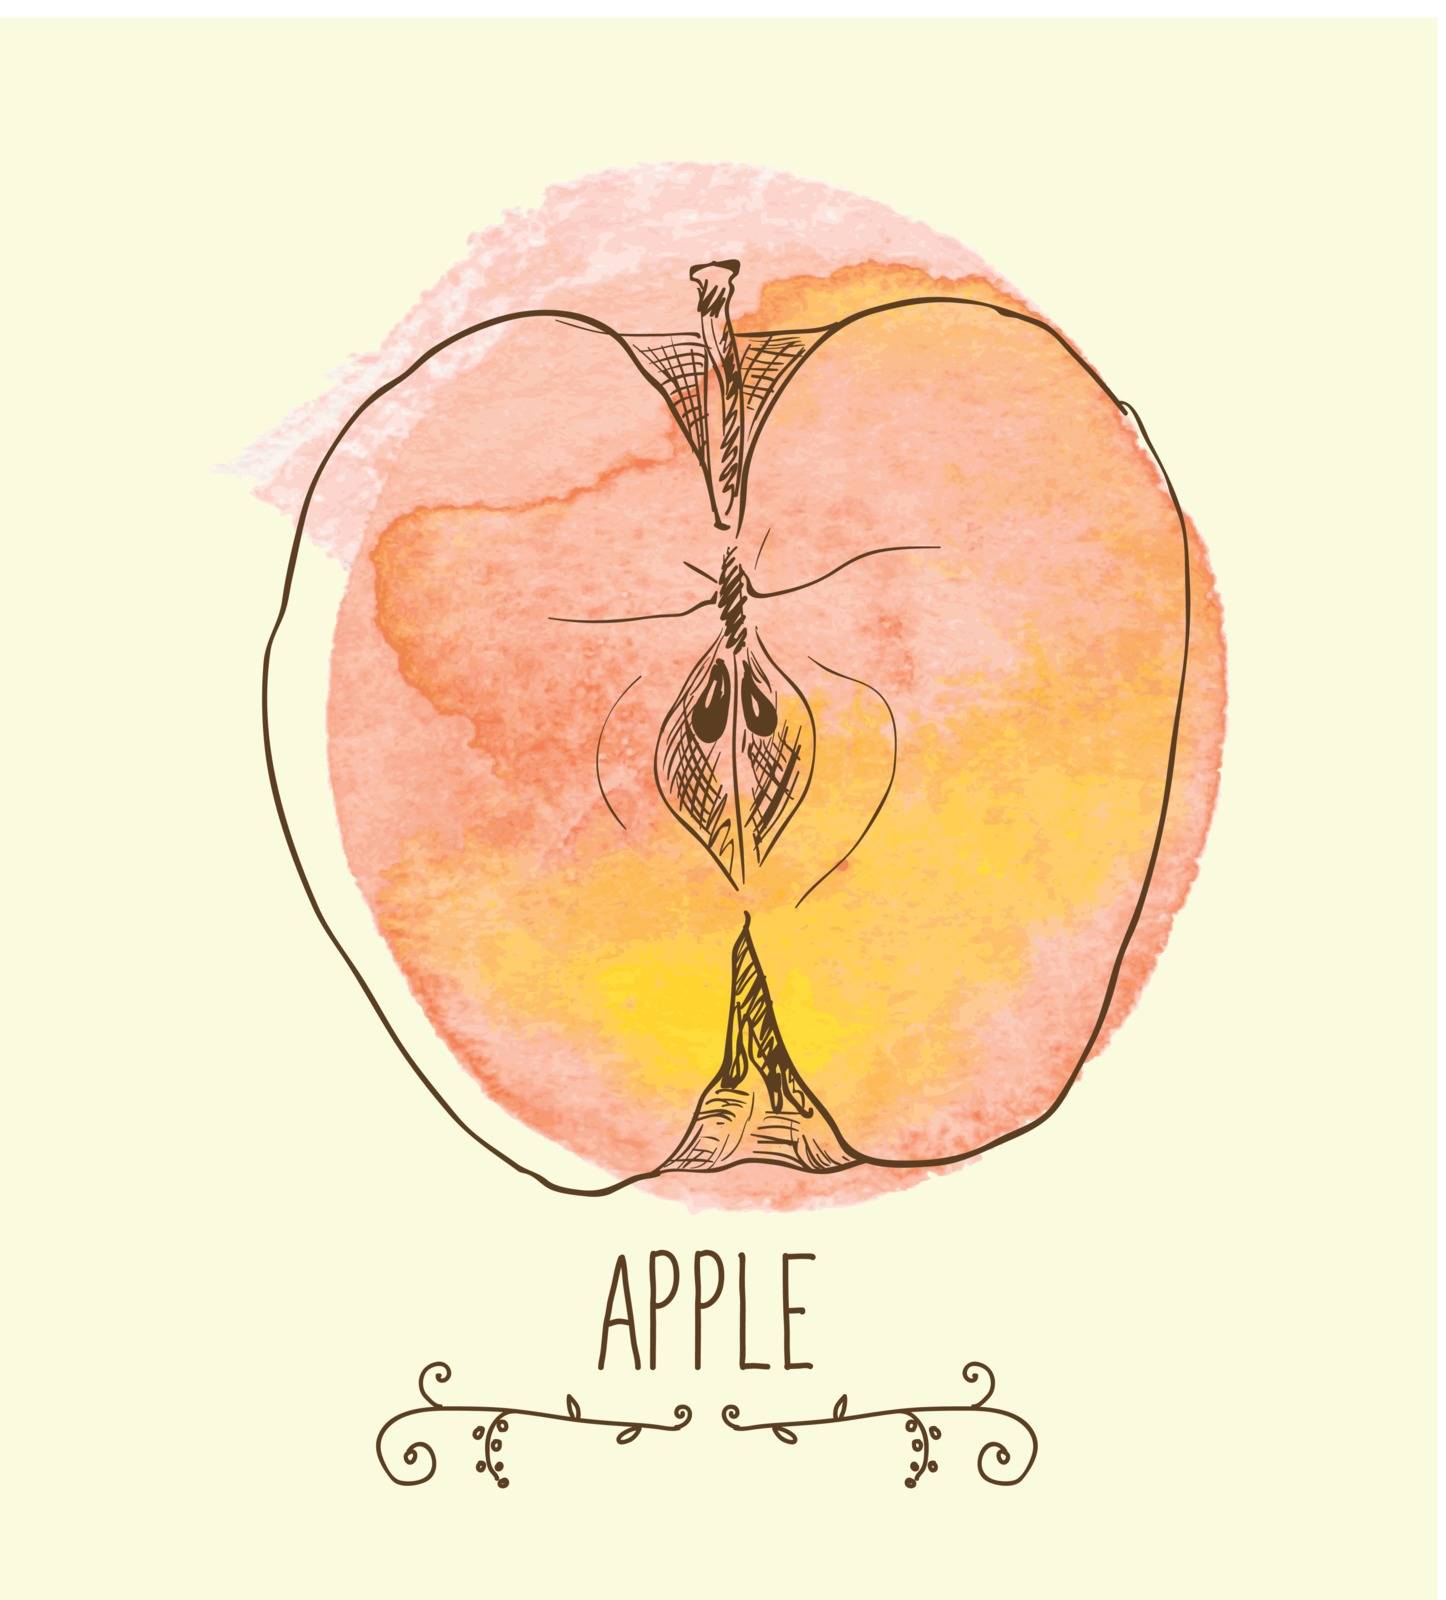 fresh useful eco-friendly apple vector illustration